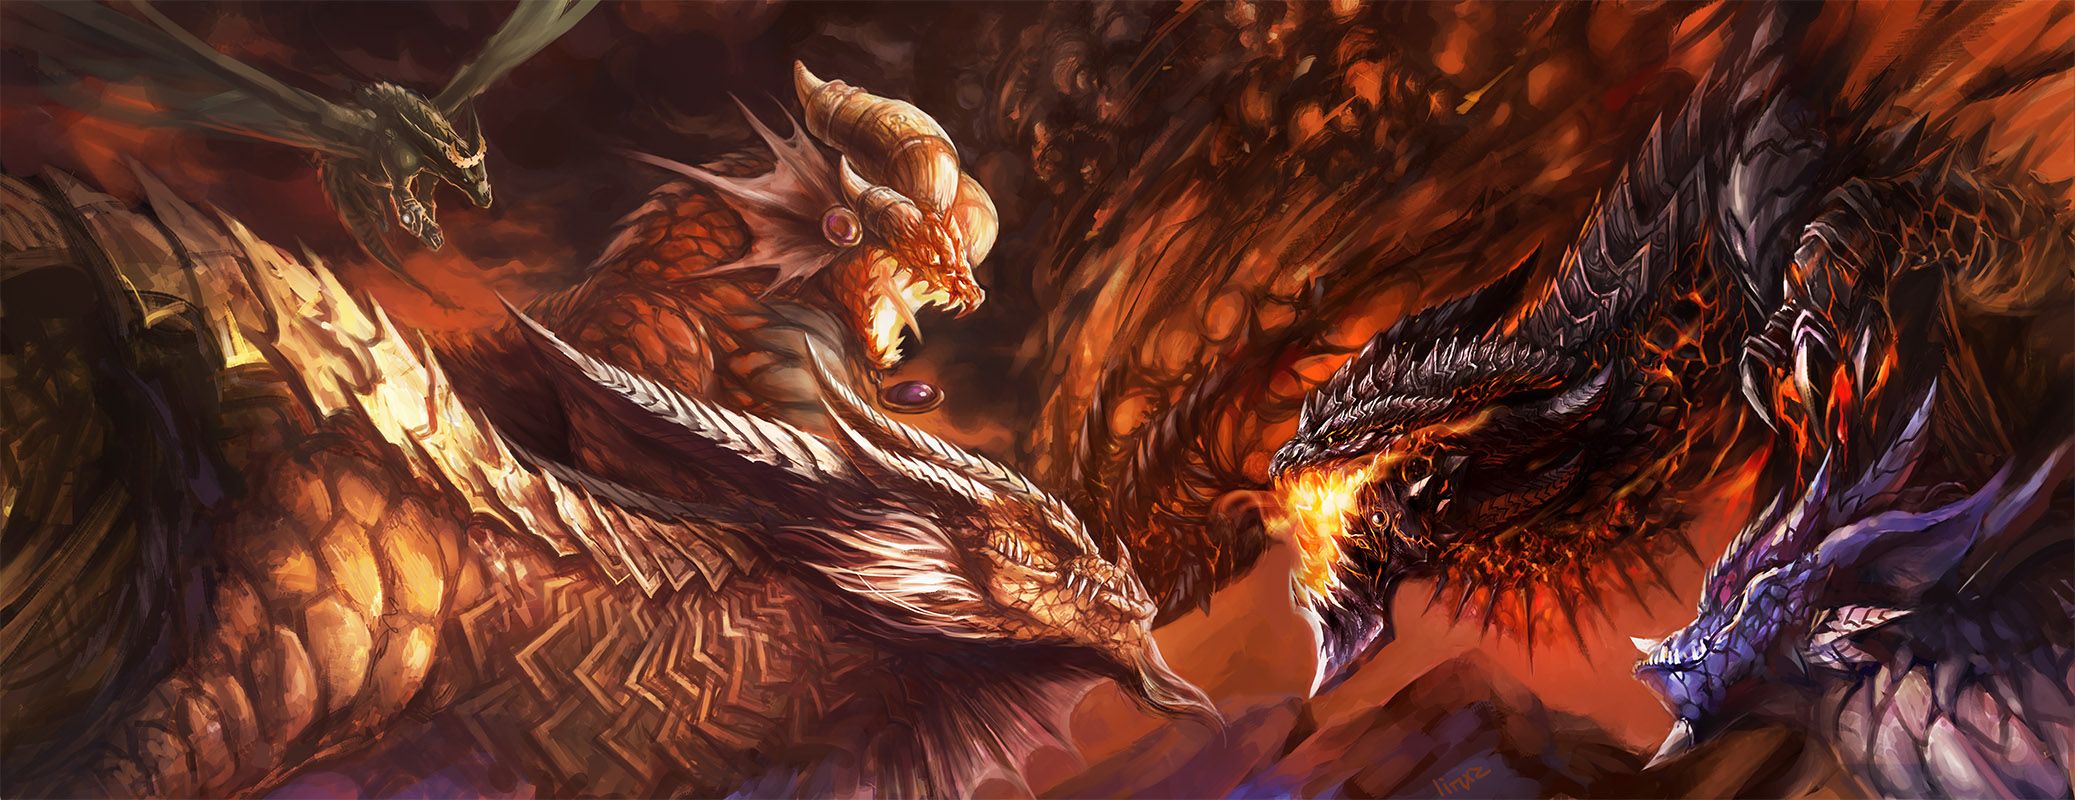 Illustration De Rui Zhang Legends World Of Warcraft Fantasy